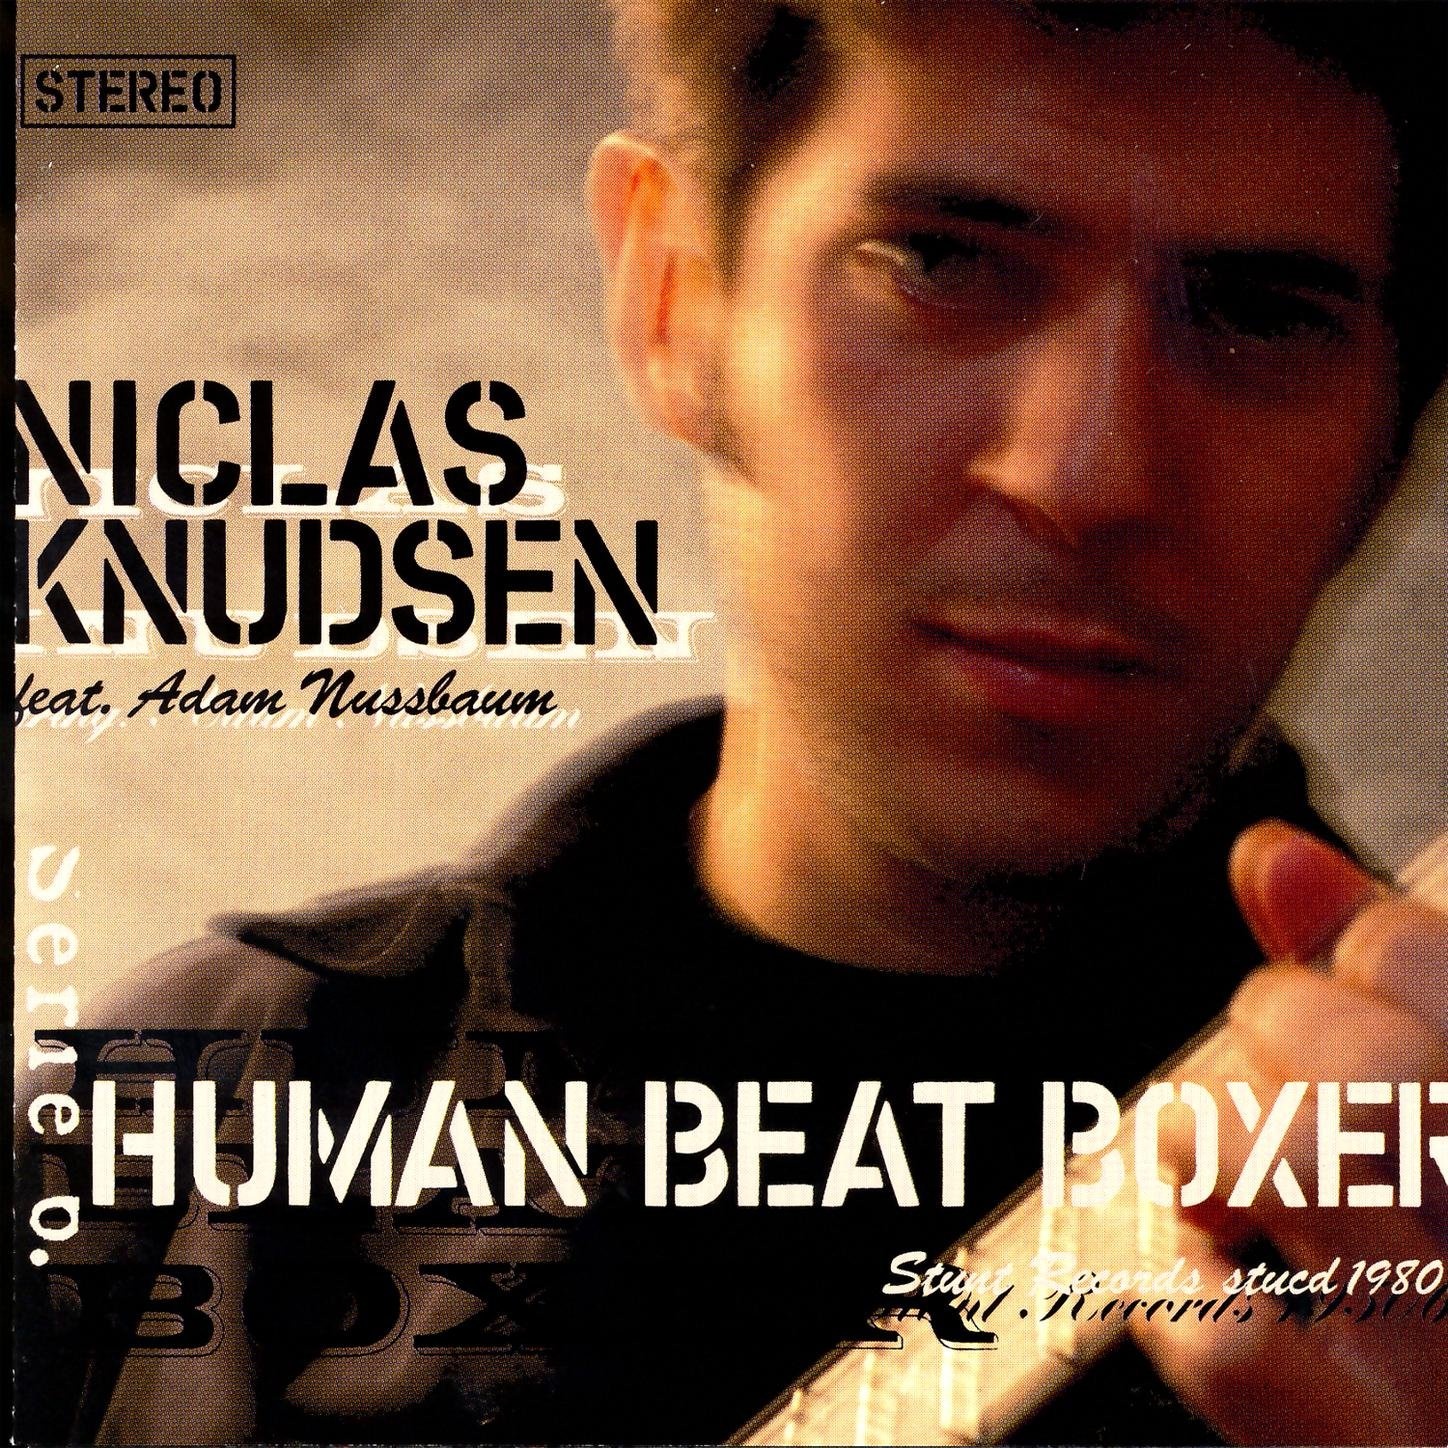 Niclas Knudsen - Human Beat Boxer [Audio CD] (Neu differenzbesteuert)